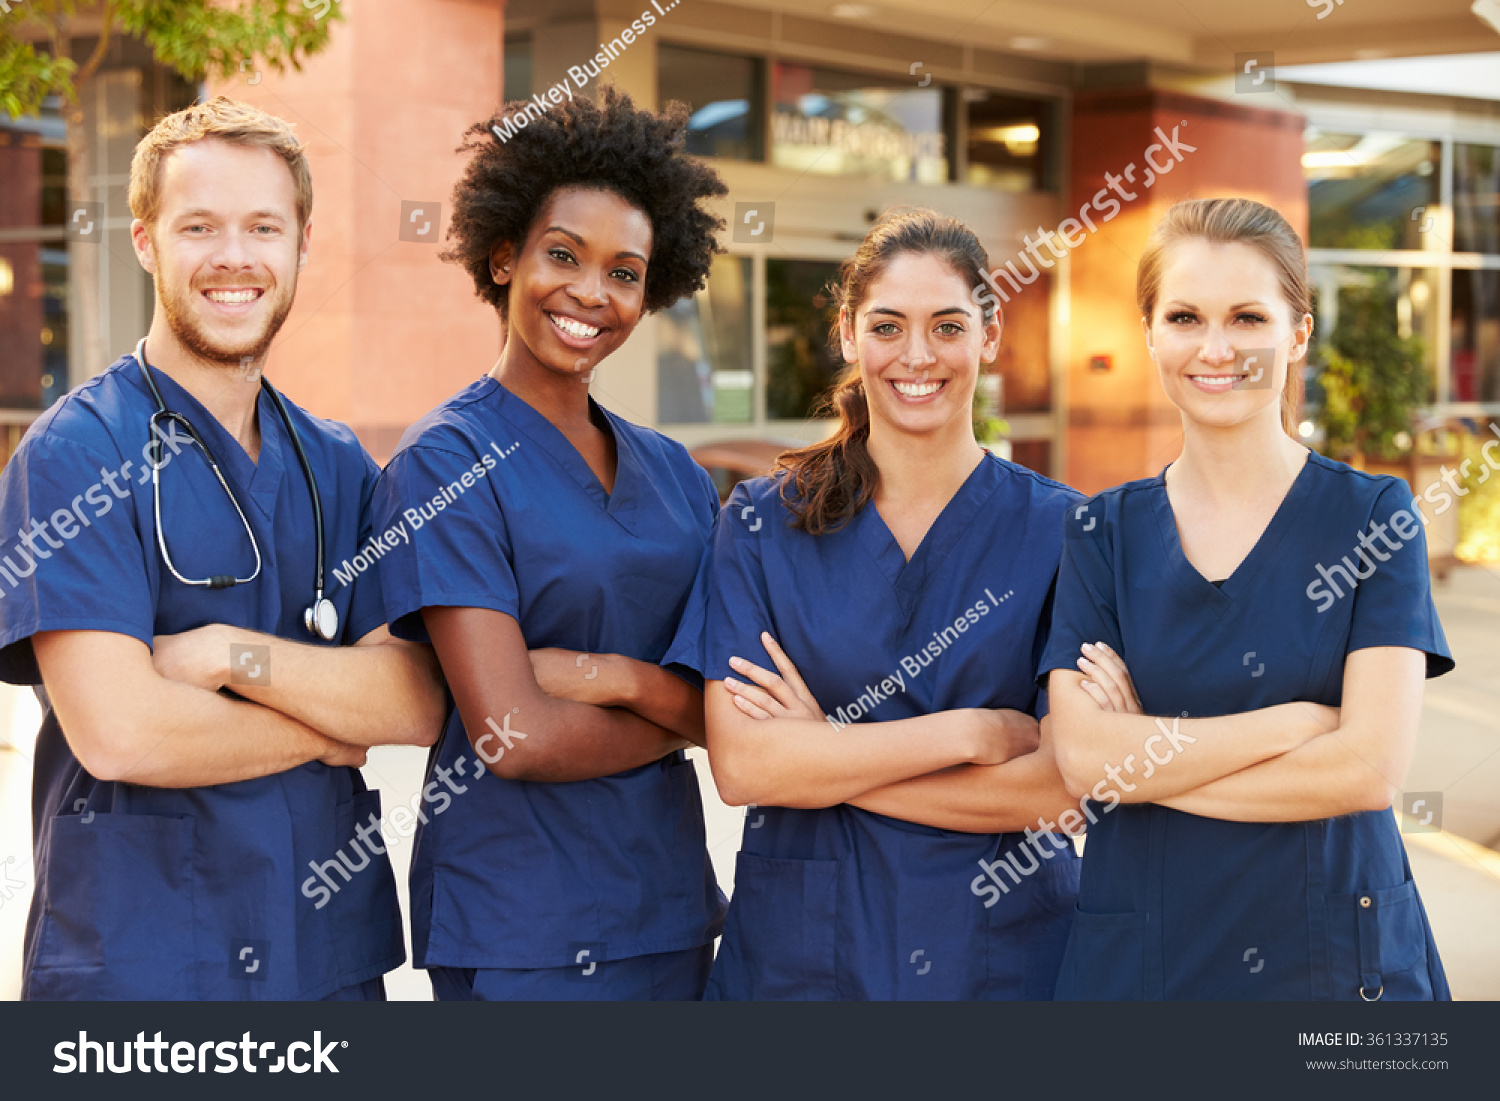 Portrait Of Medical Team Standing Outside Hospital #361337135